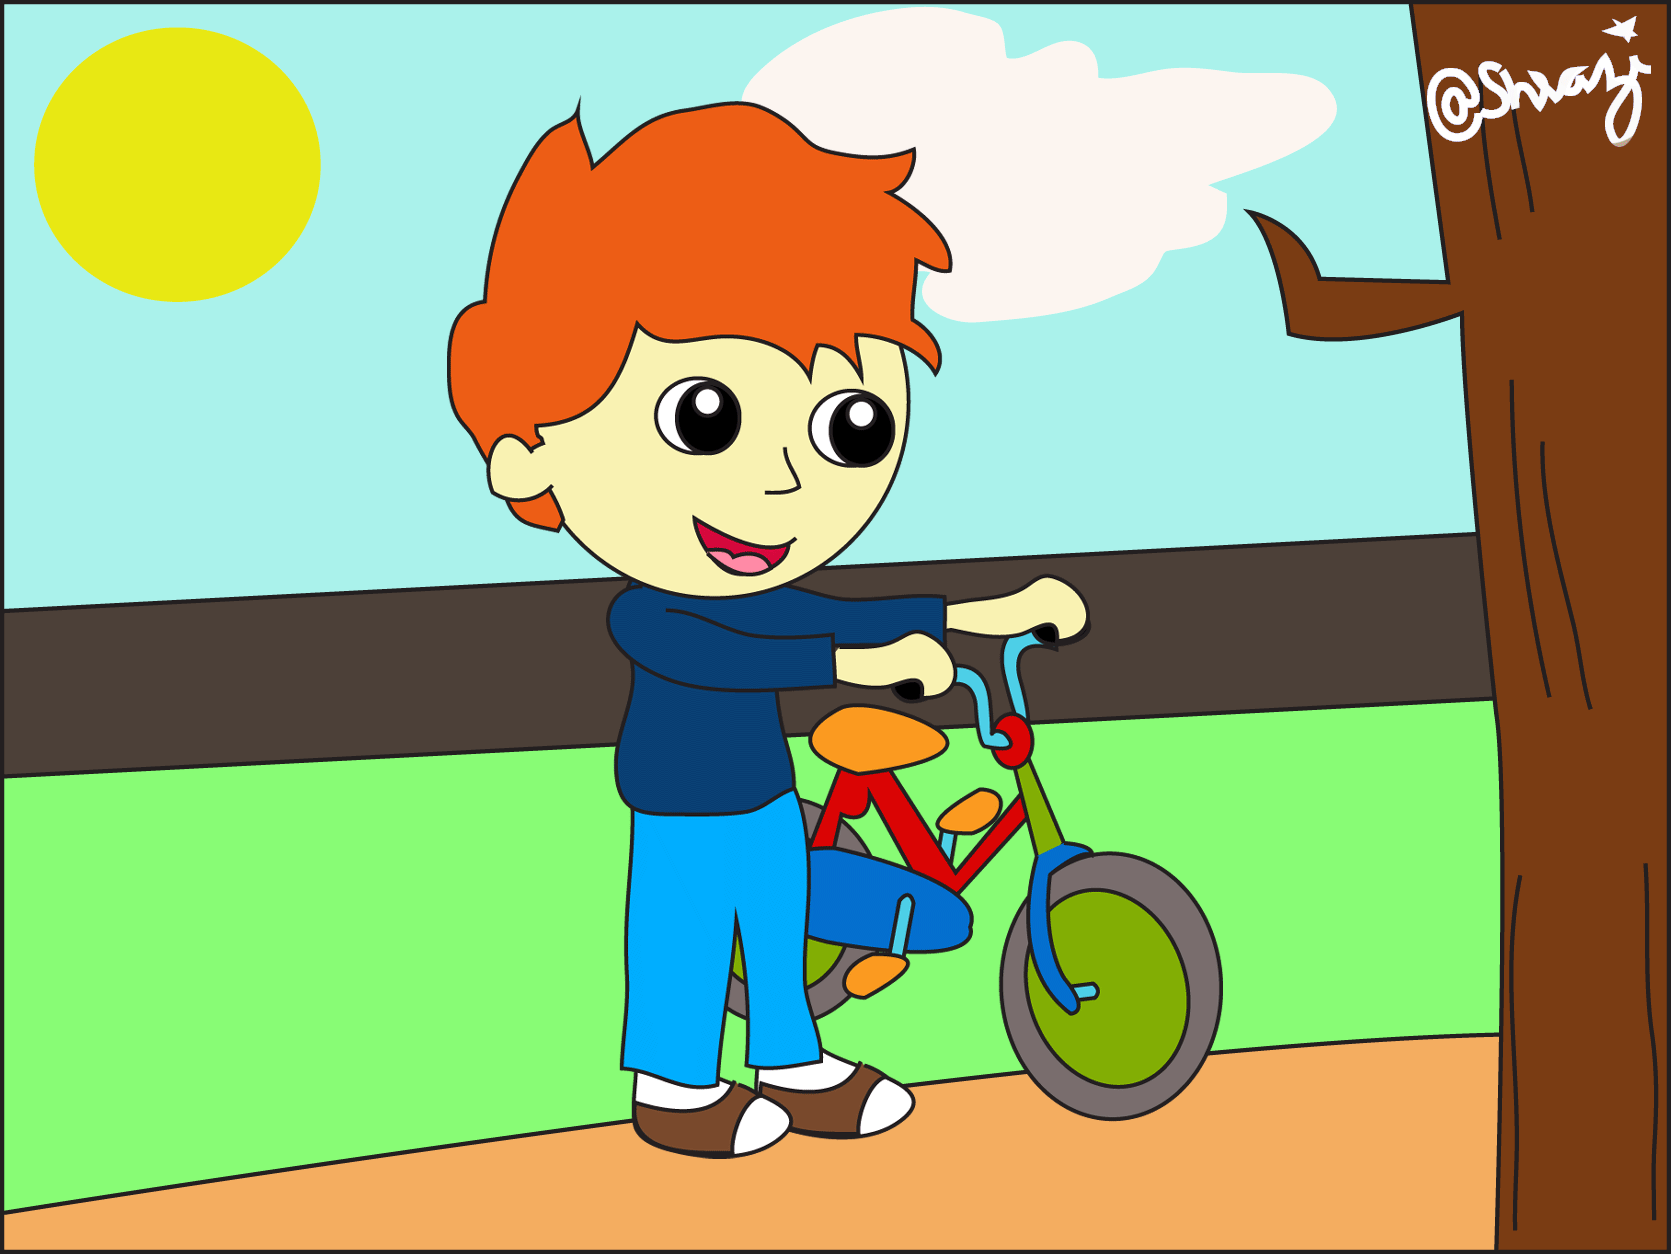 kids riding bikes cartoon